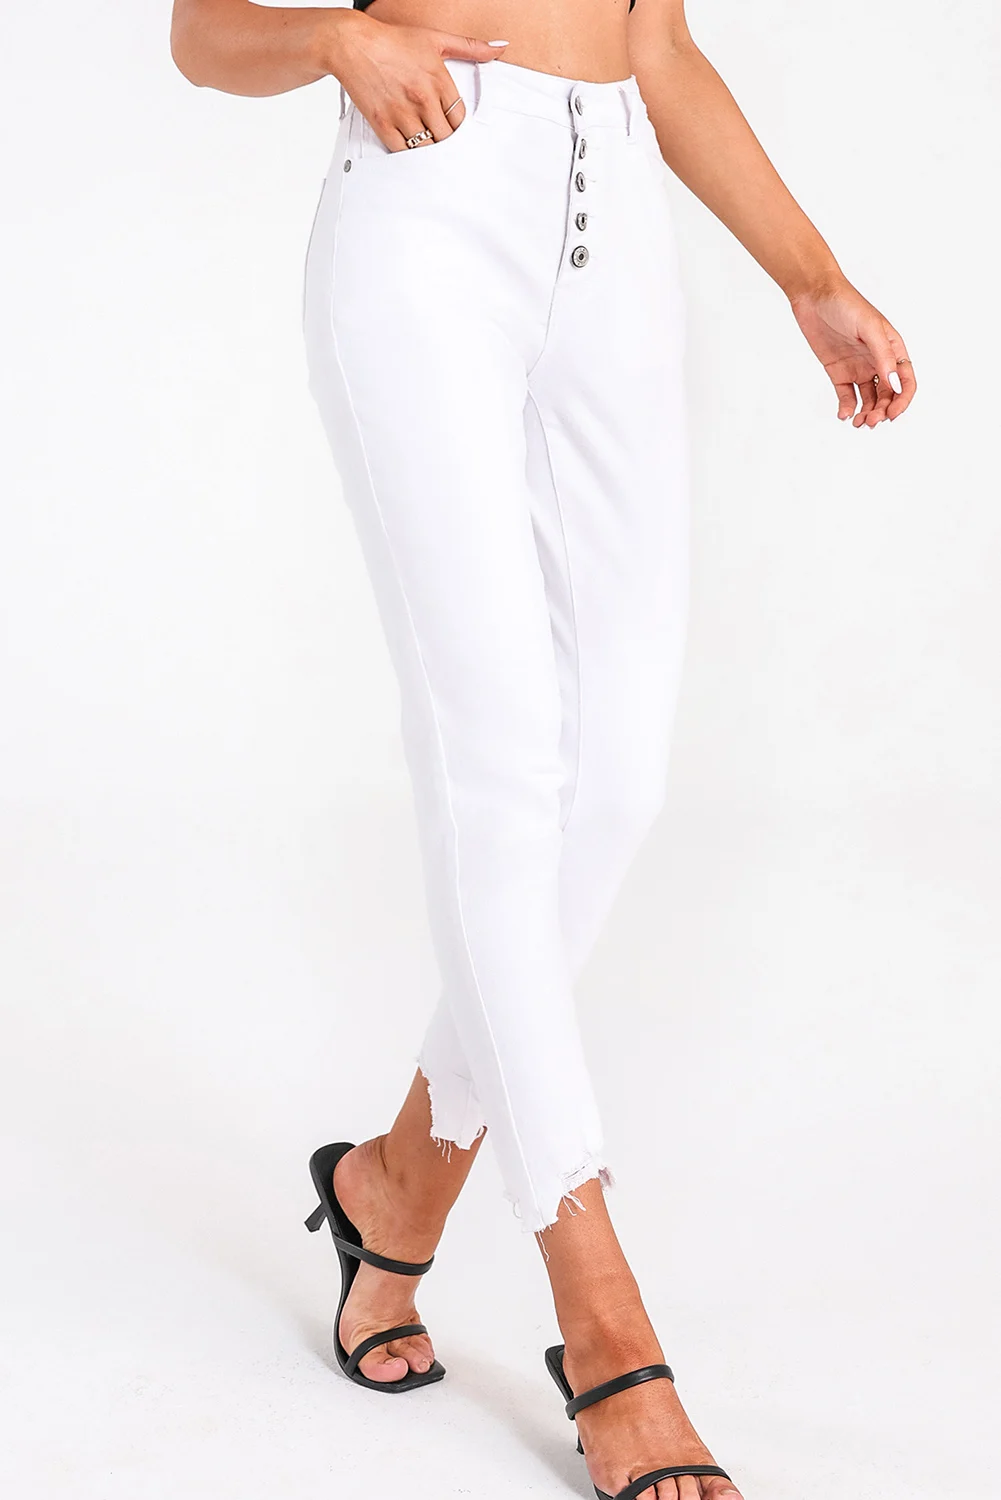 Dear-Lover New Arrivals Denim Pants Women Solid Color High Waist Harem Designer Ladies White Jeans